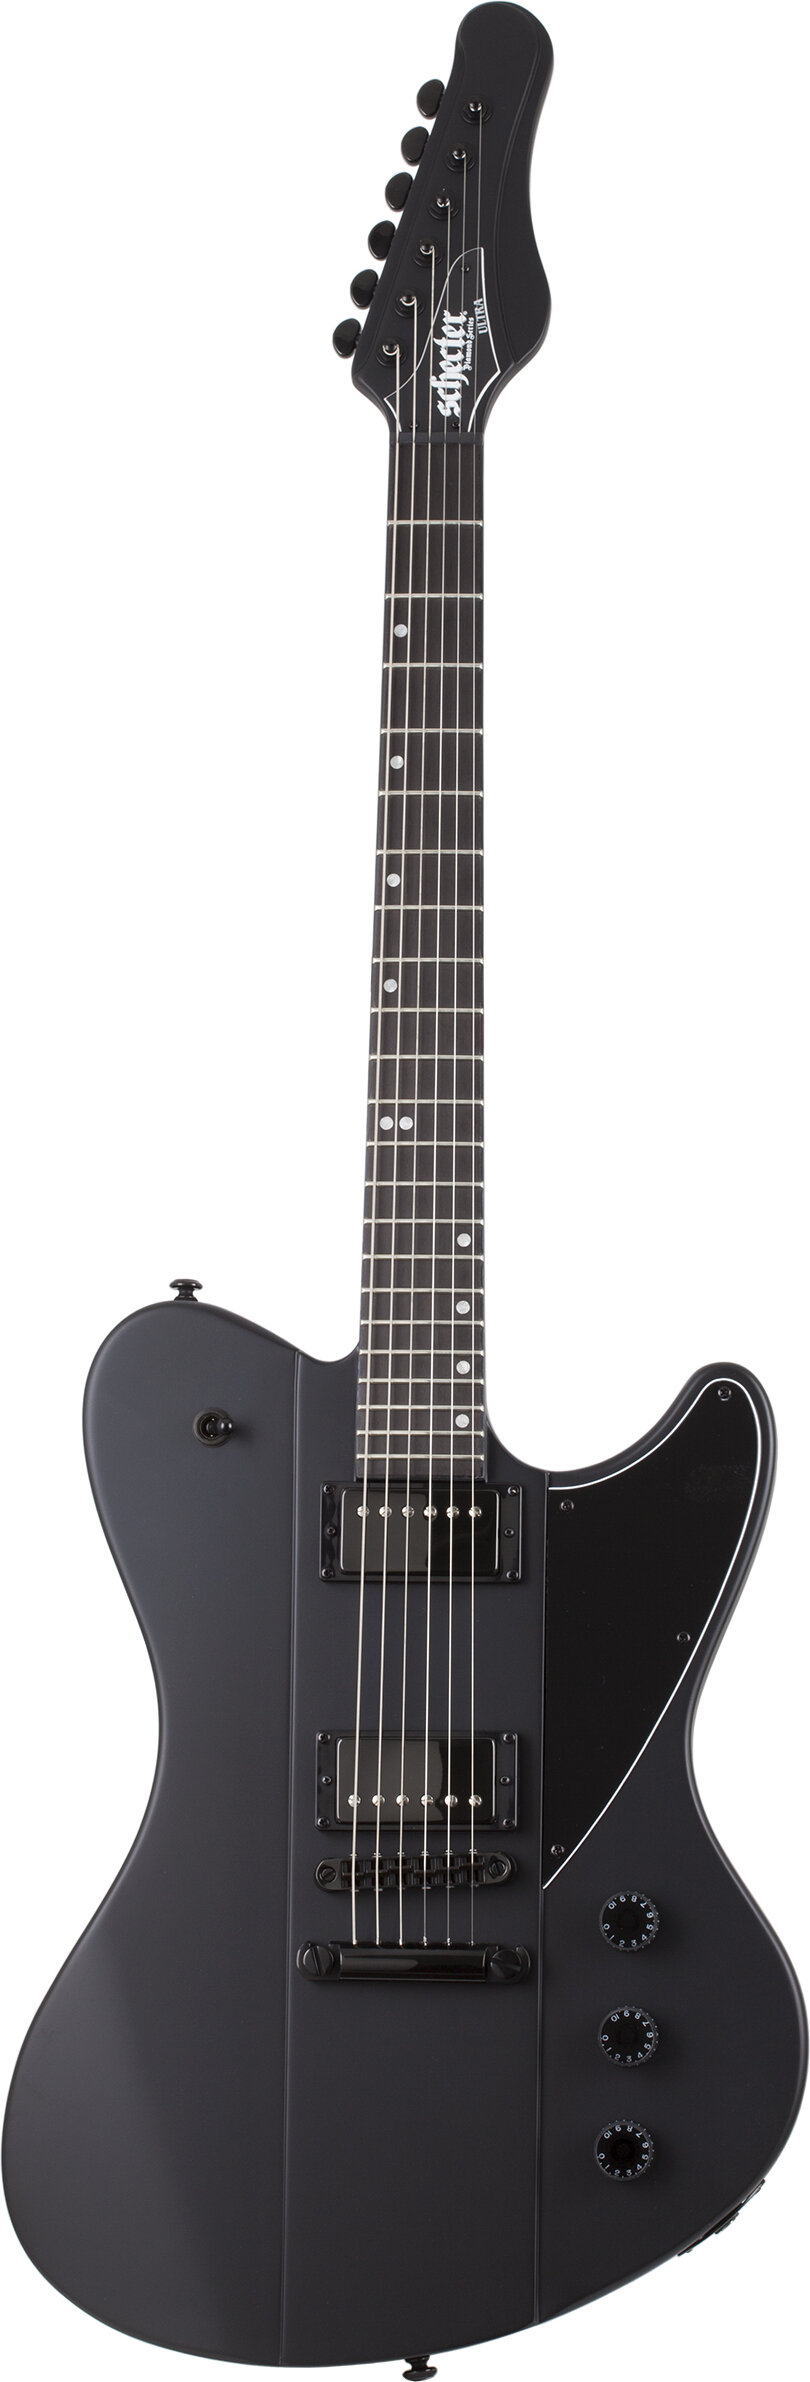 Schecter Ultra Electric Guitar Satin Black -  1721